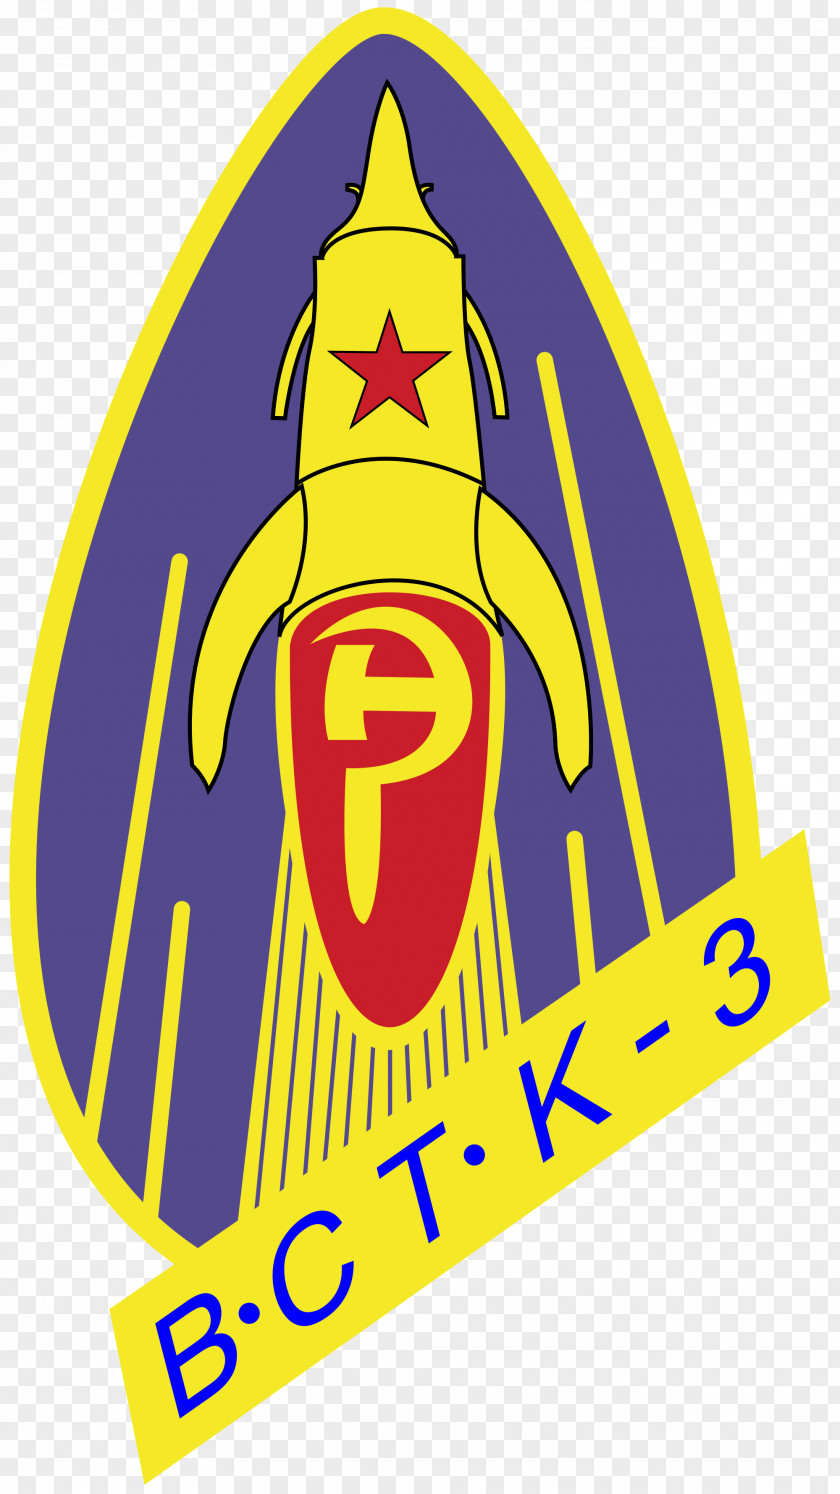 Soviet Union Vostok 3 4 1 Spaceflight PNG